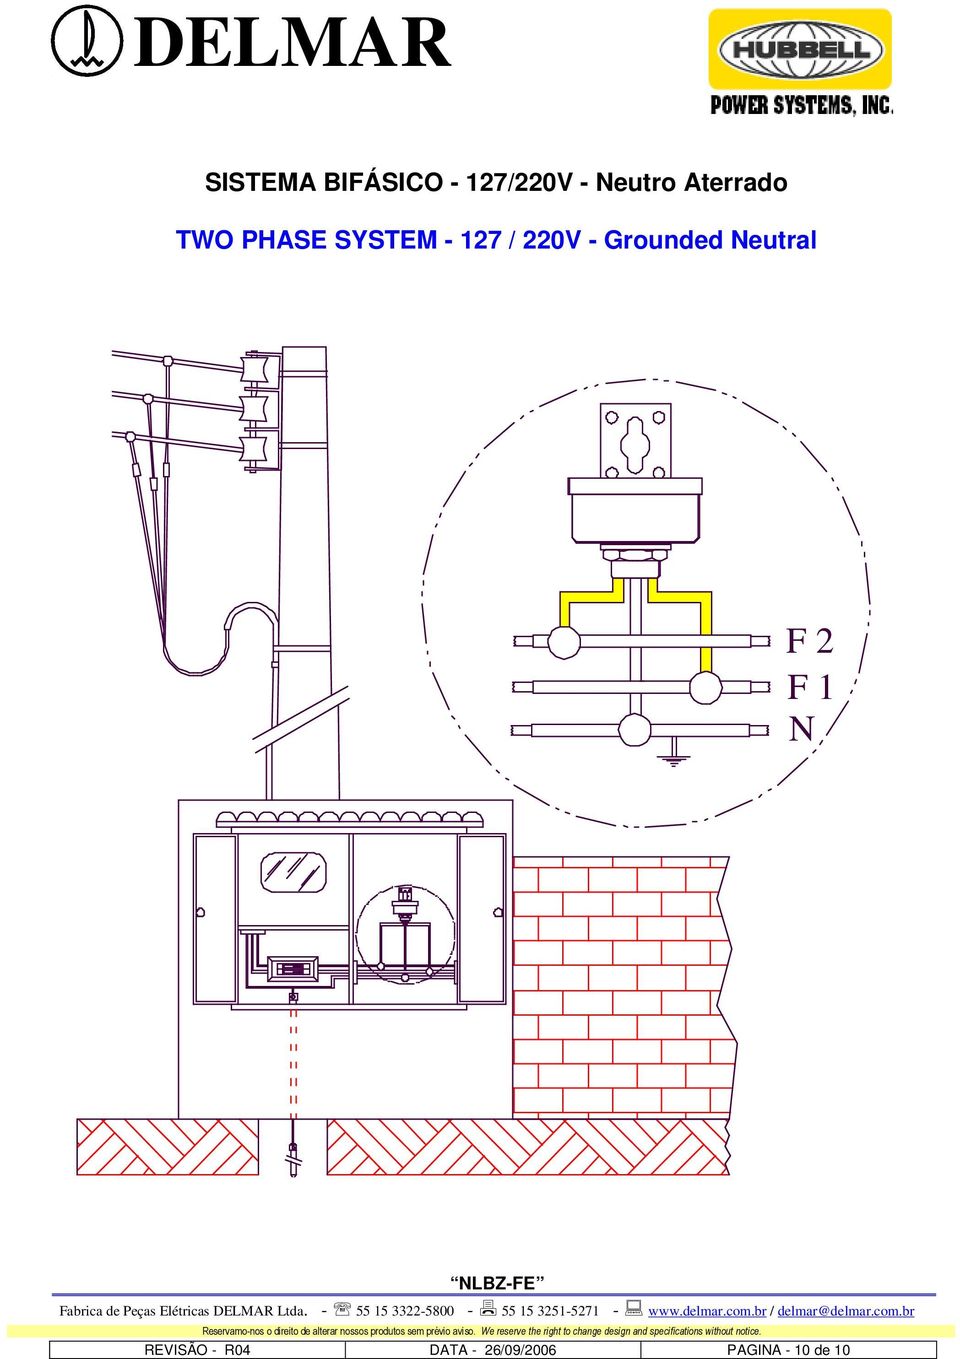 220V - Grounded eutral LBZ-FE